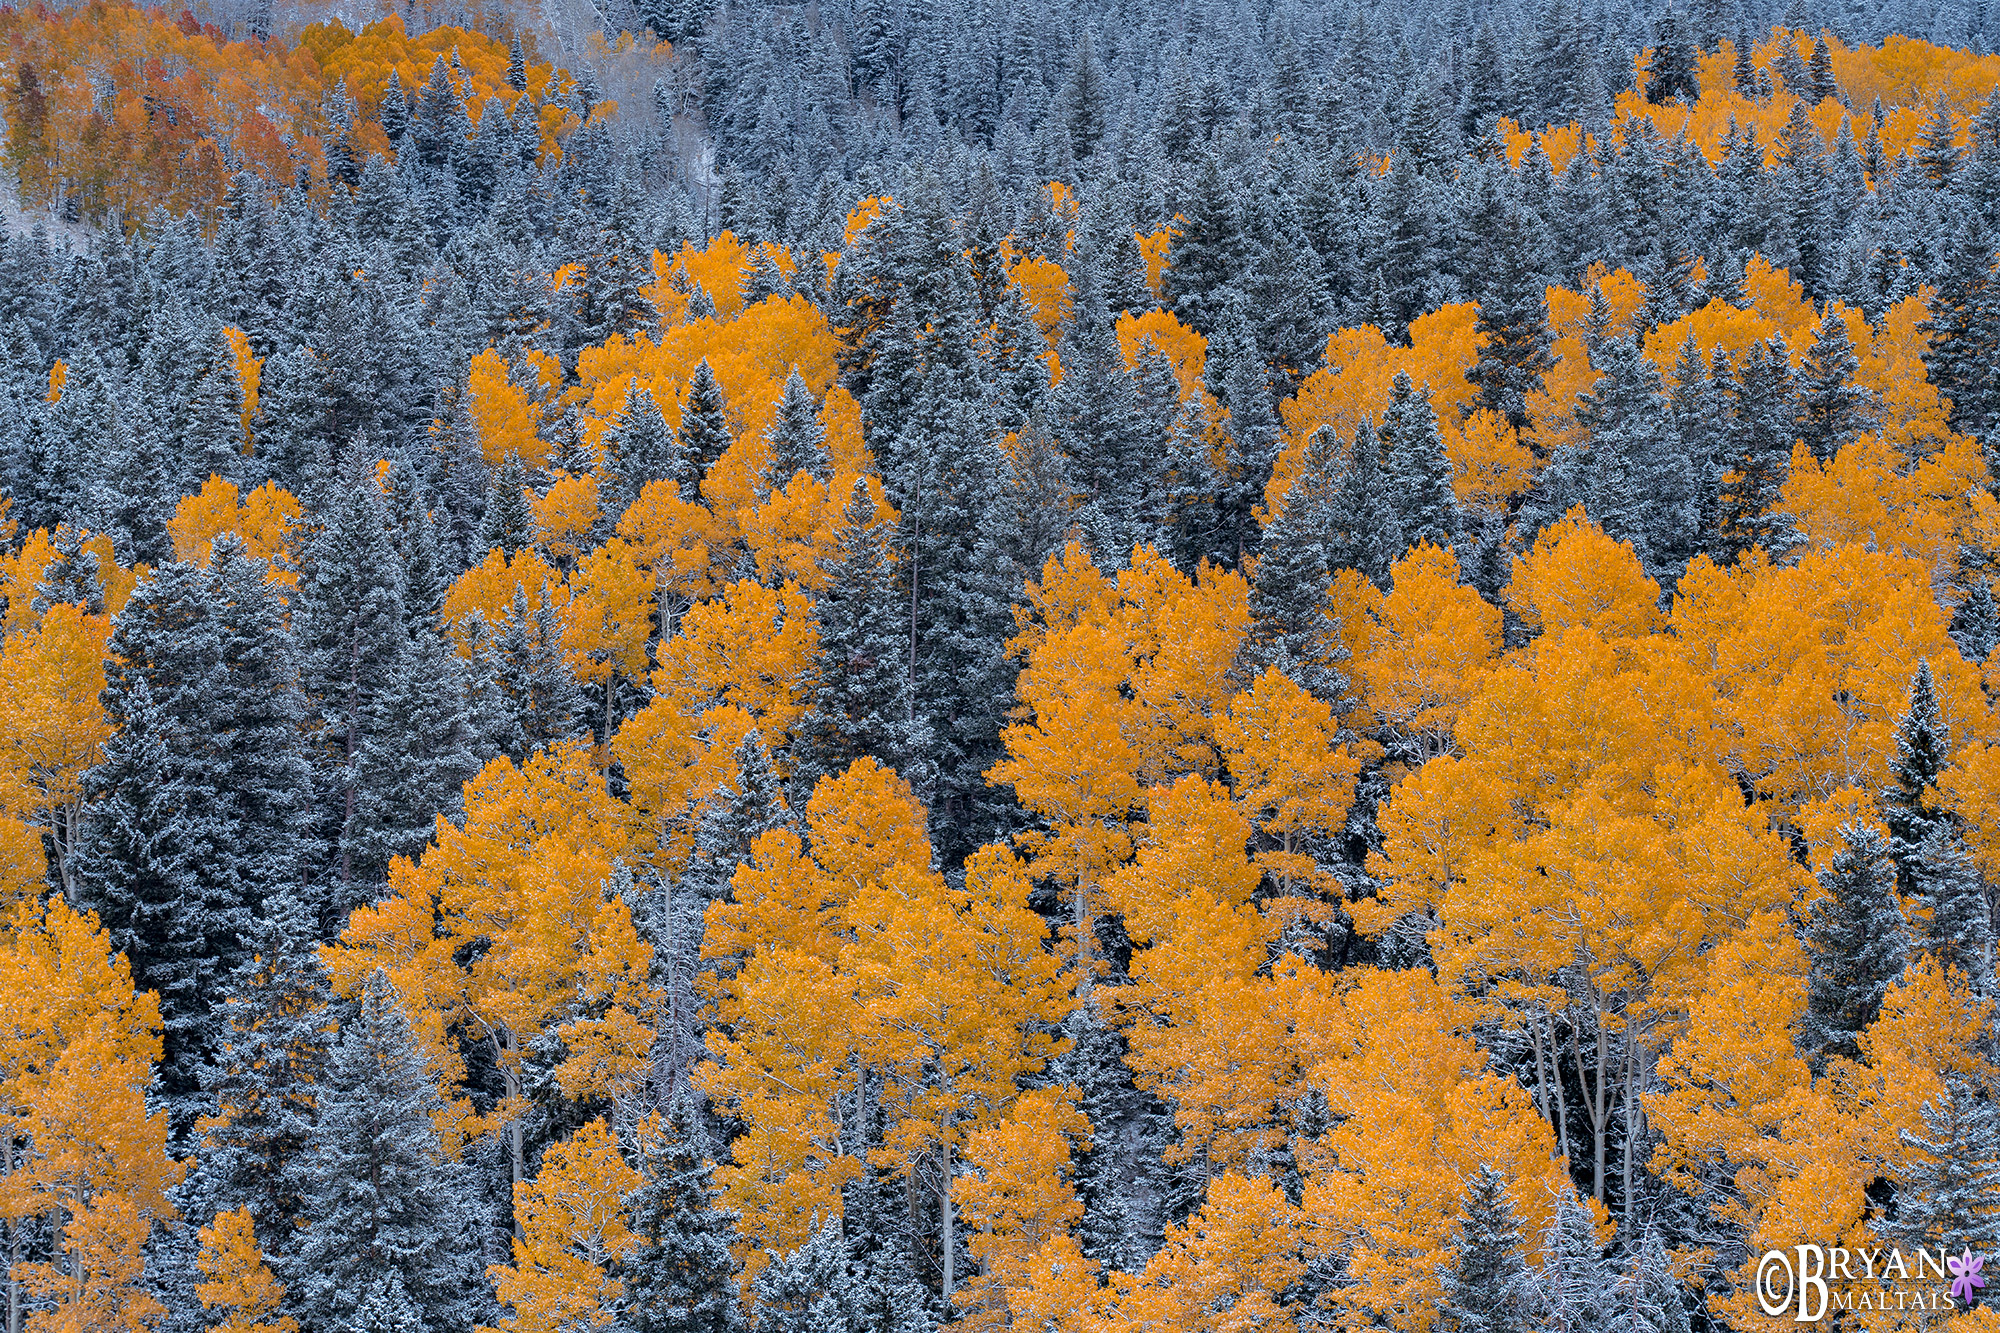 yellow aspens blue spruce contrast